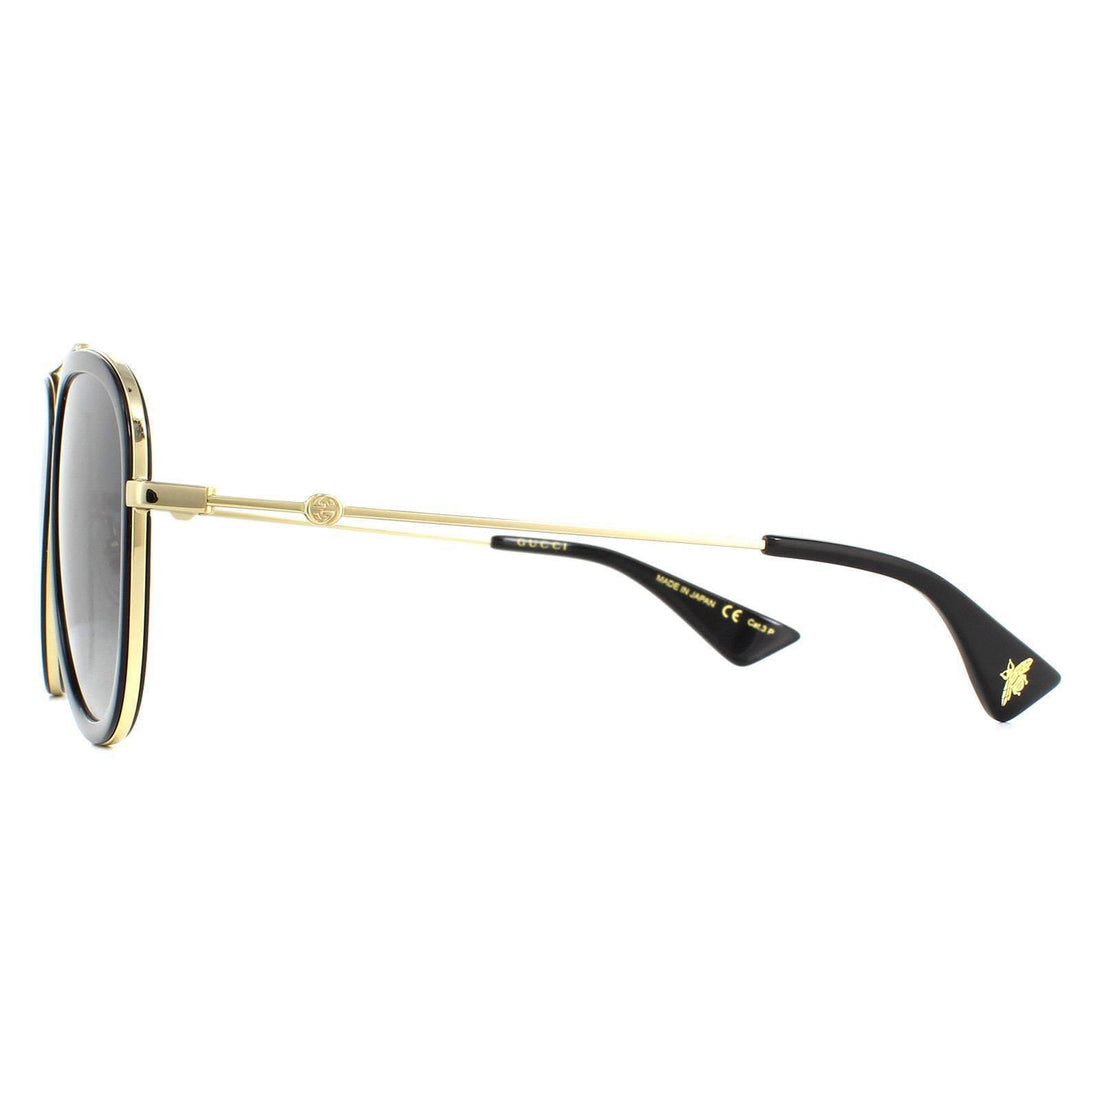 Gucci Sunglasses GG0062S 011 Black And Gold Grey Gradient Polarized